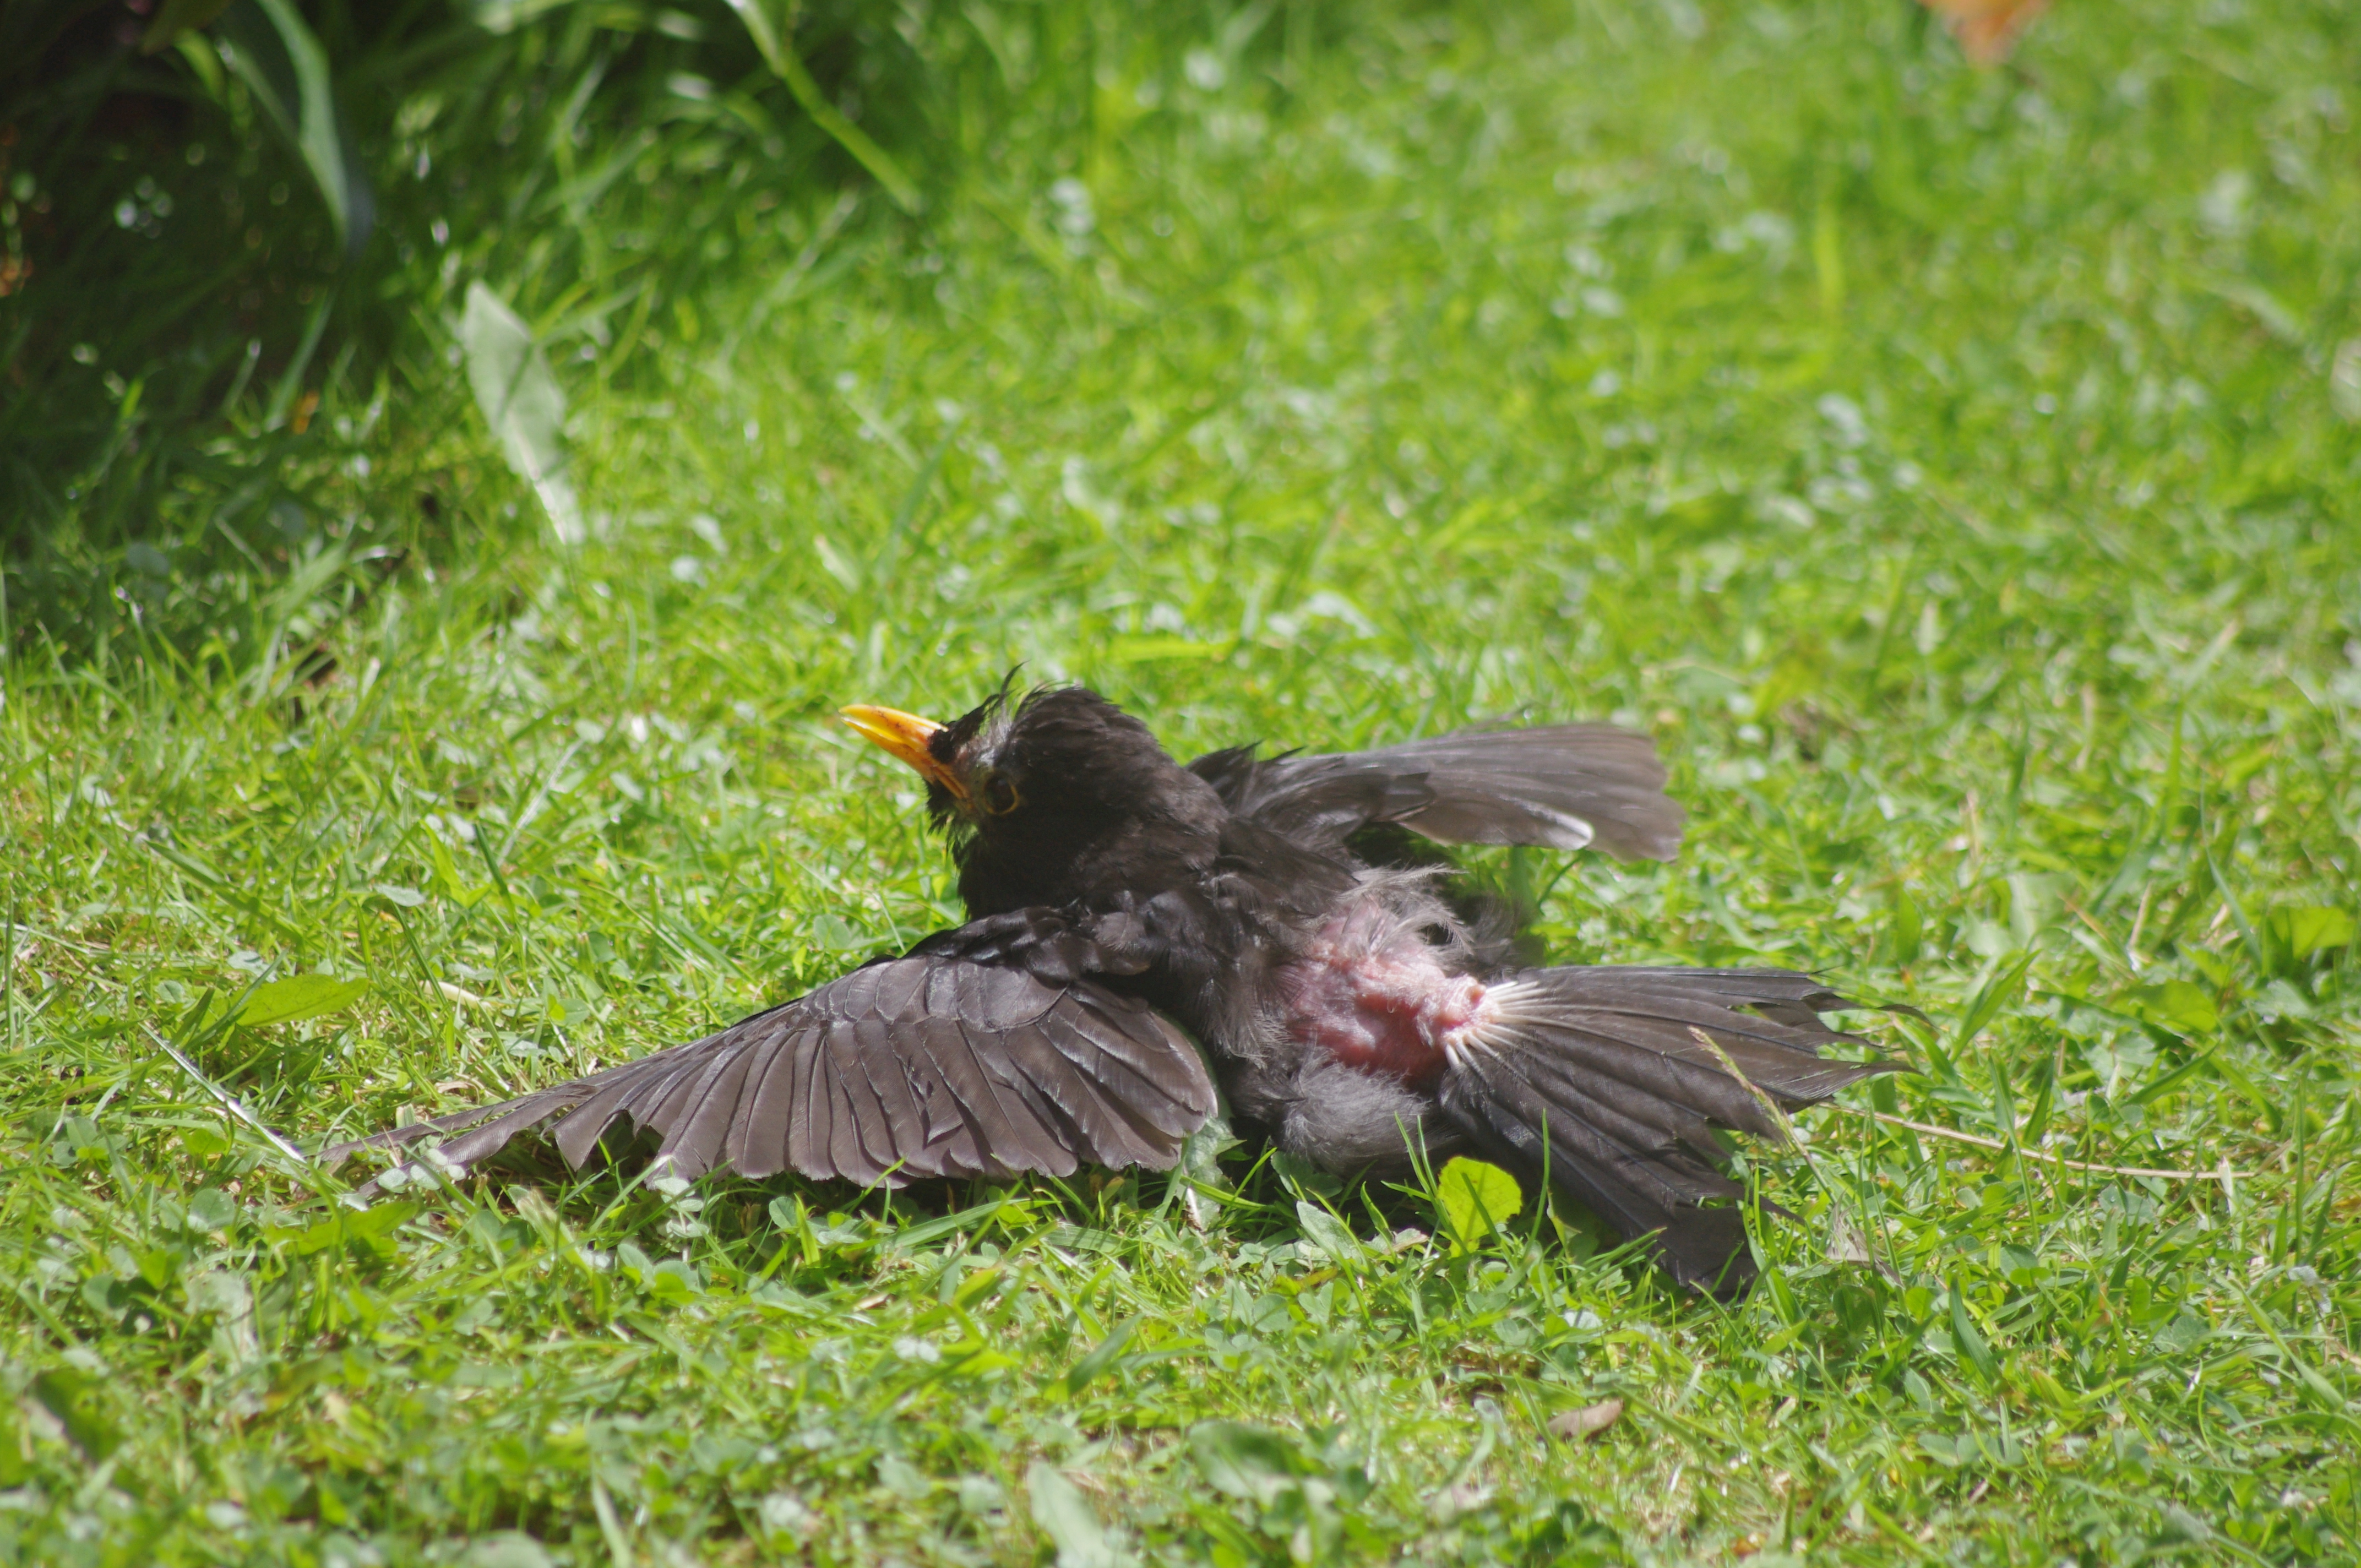 sunbathing blackbird - but normal moult or something sinister ...